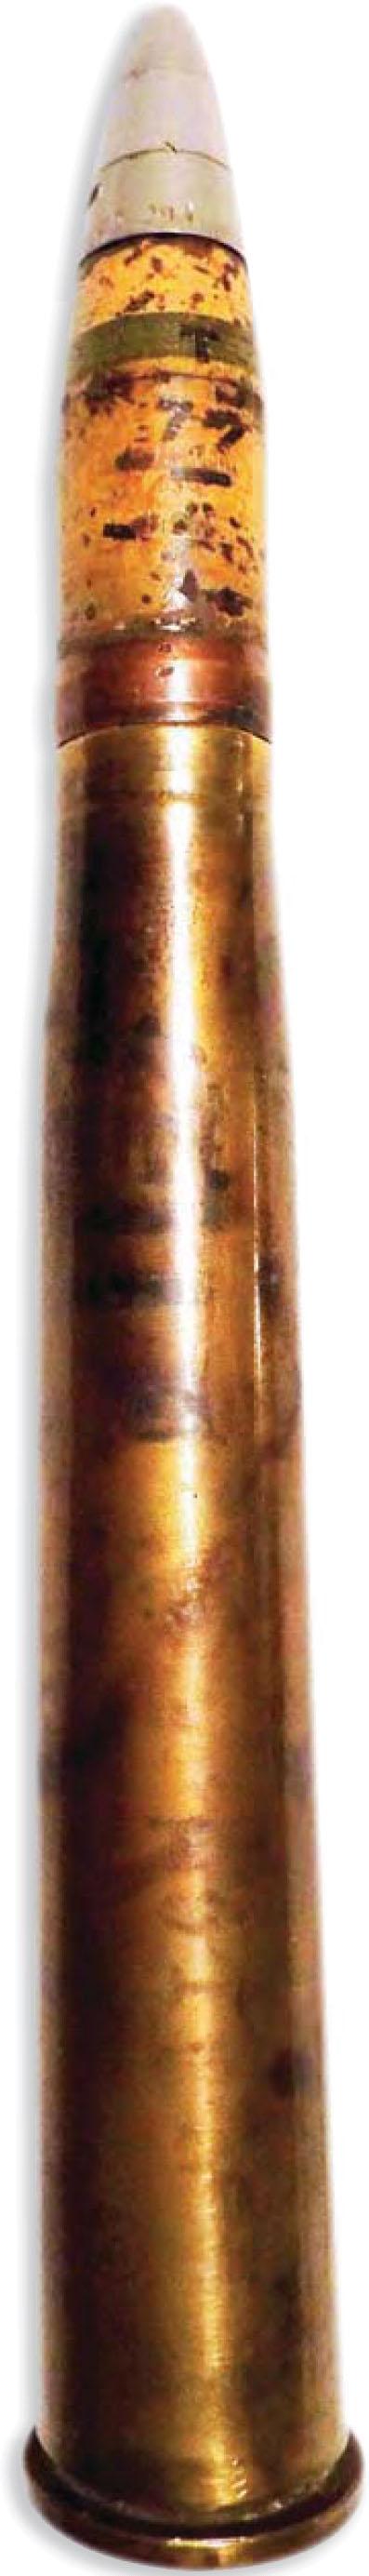 WW2 1942 British Dated 20mm Oerlikon Ammunition Shell Casing in Ammunition